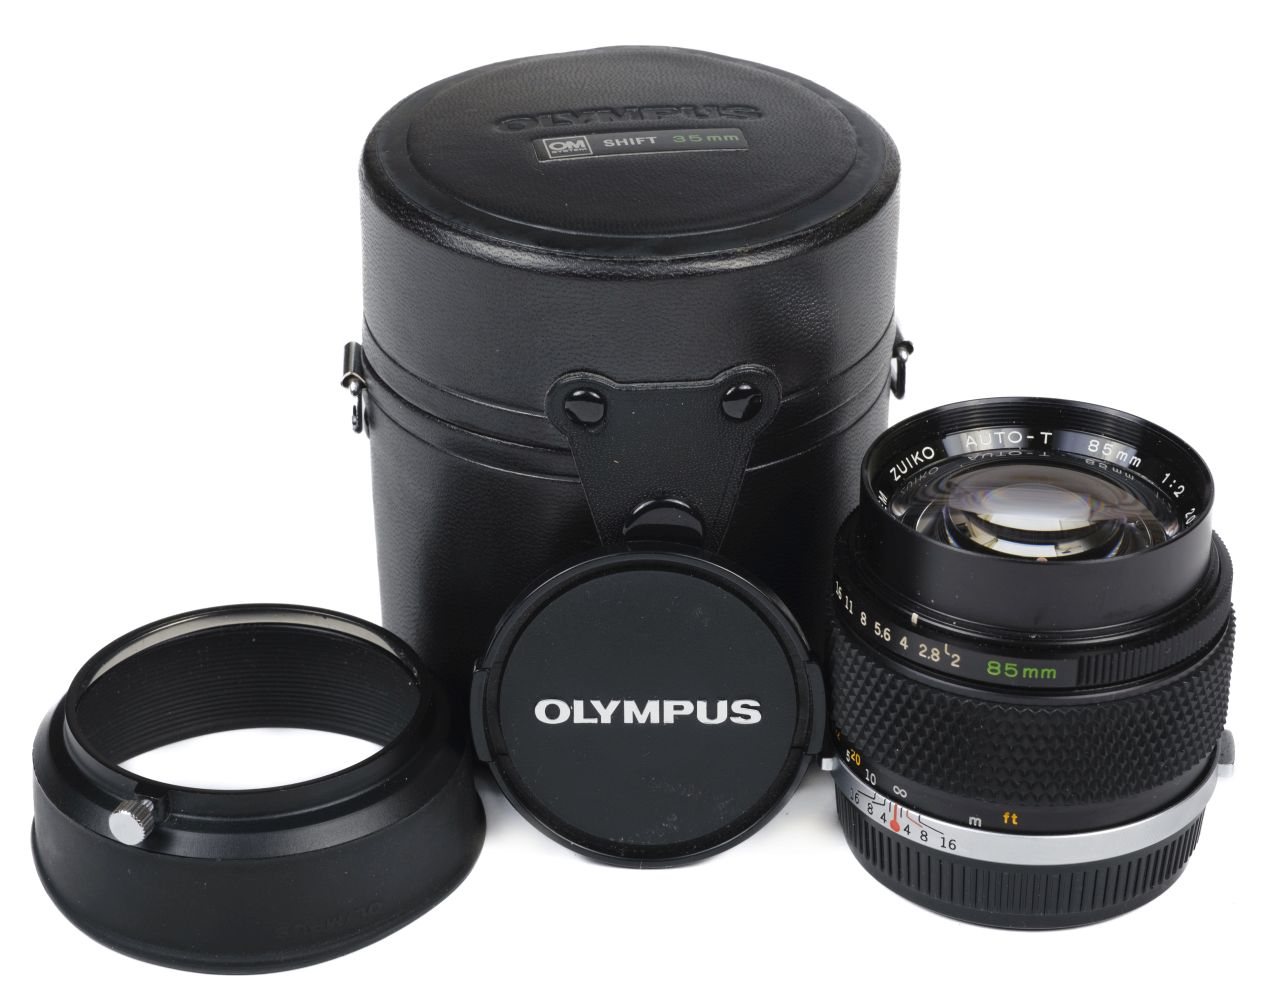 Olympus OM-system Zuiko Auto-T 85mm f2 prime camera lens for OM-1, OM-2 etc - Image 4 of 4